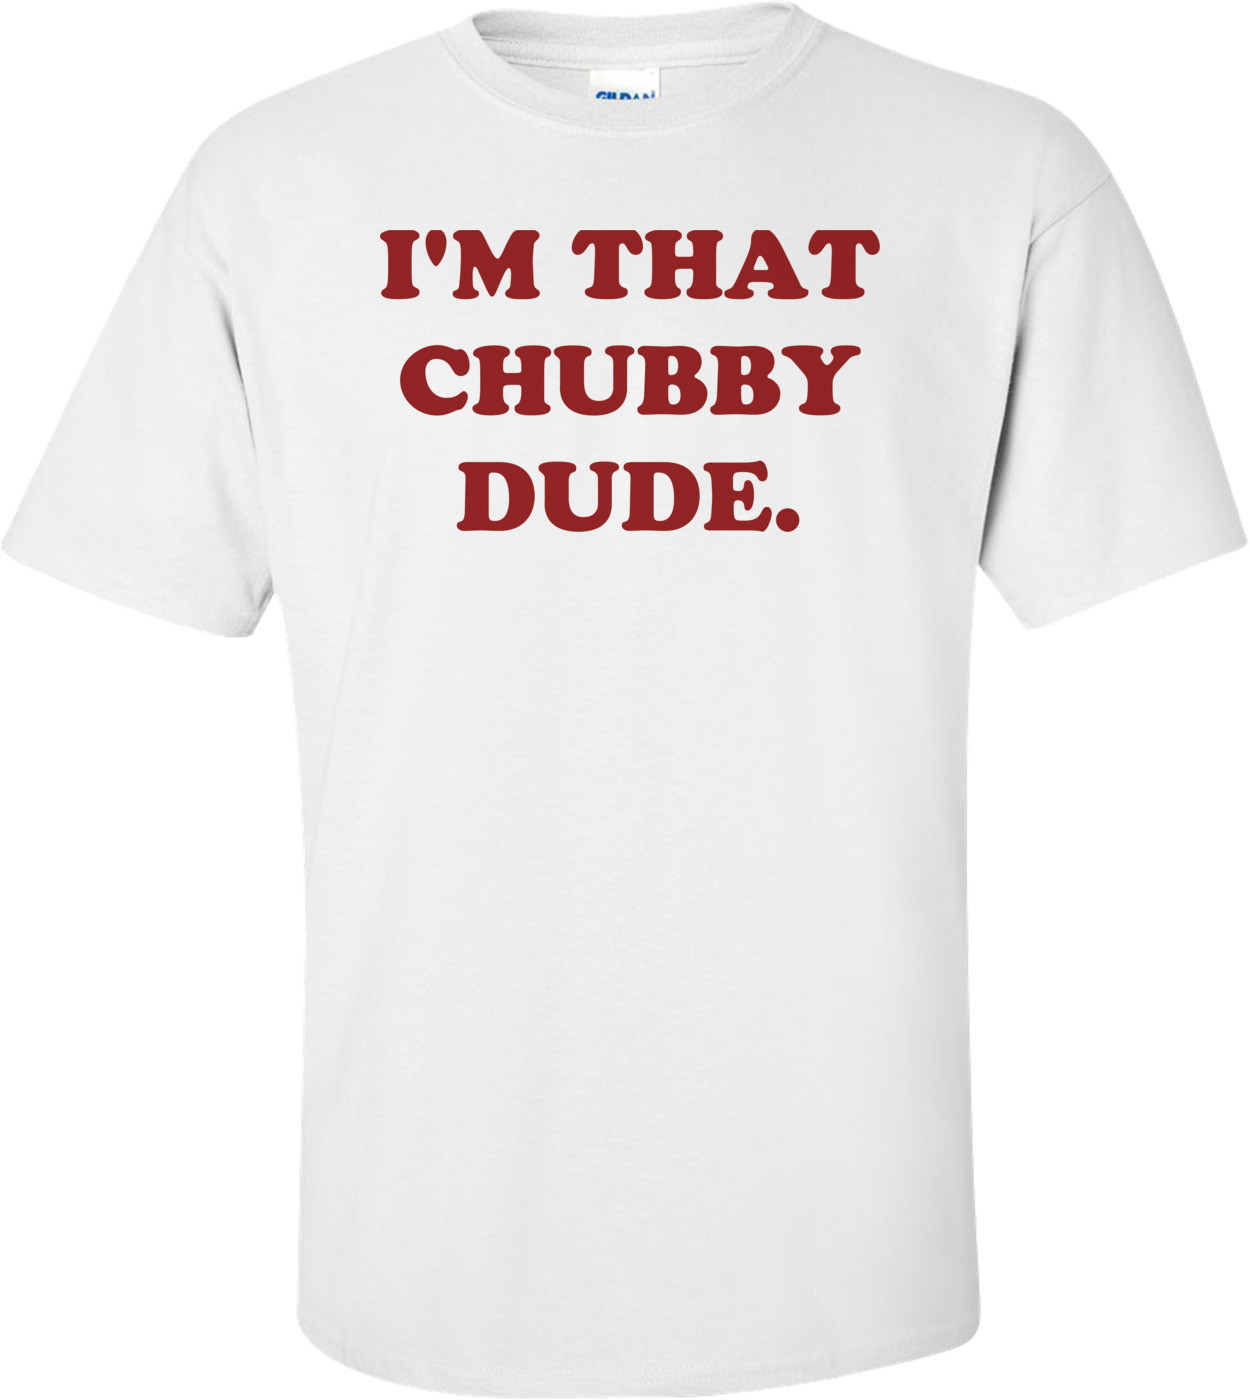 I'M THAT CHUBBY DUDE. Shirt